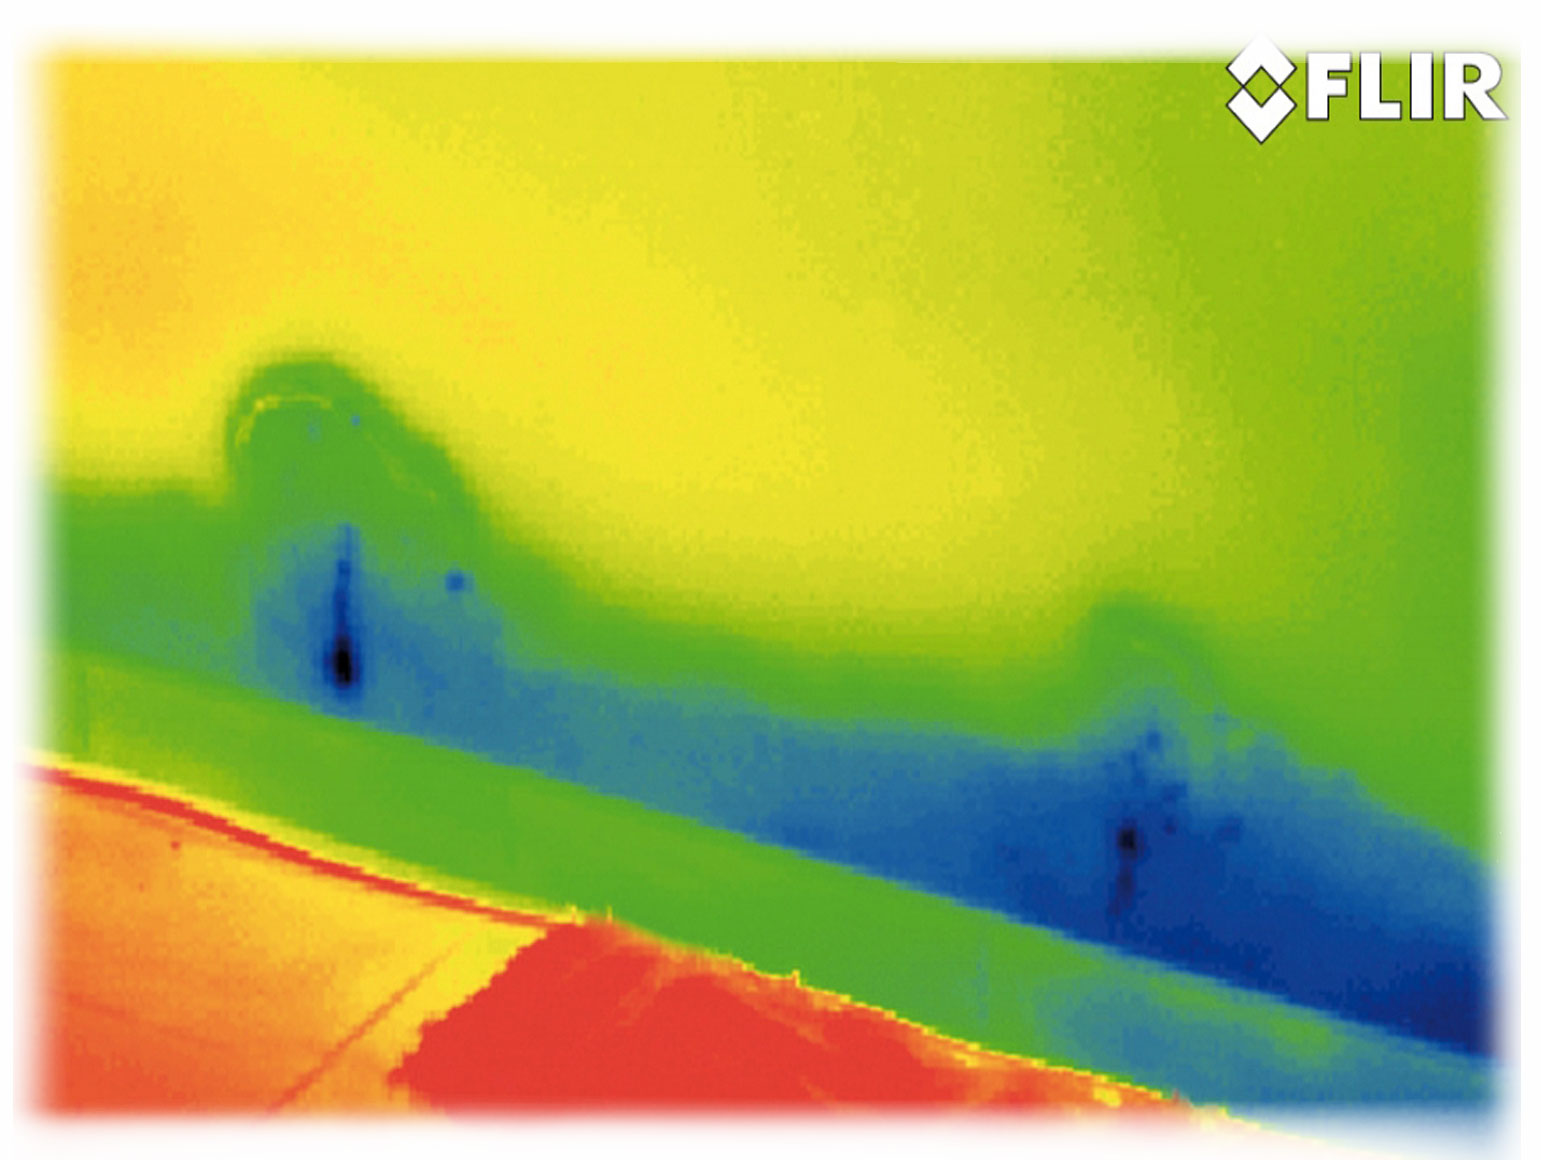 ARCHI-VISION SARL Suisse, thermographie infrarouge, audit thermique energetique, expertise batiment à Genève